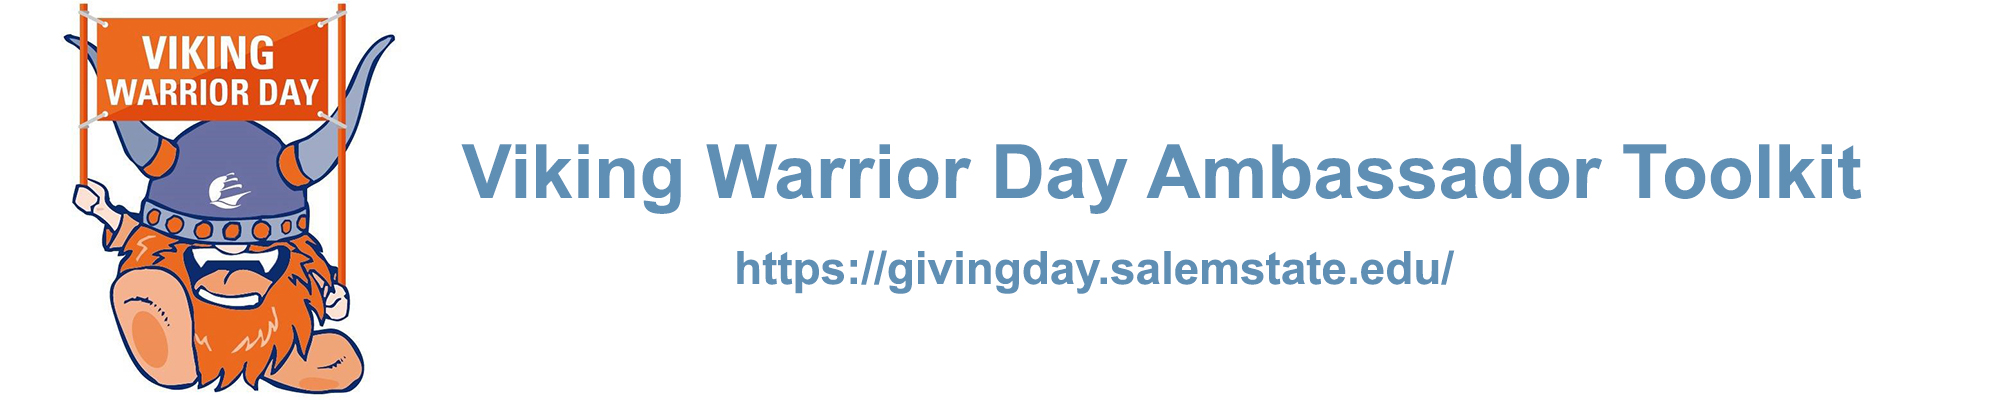 Salem State University Viking Warrior Day Ambassador Toolkit 